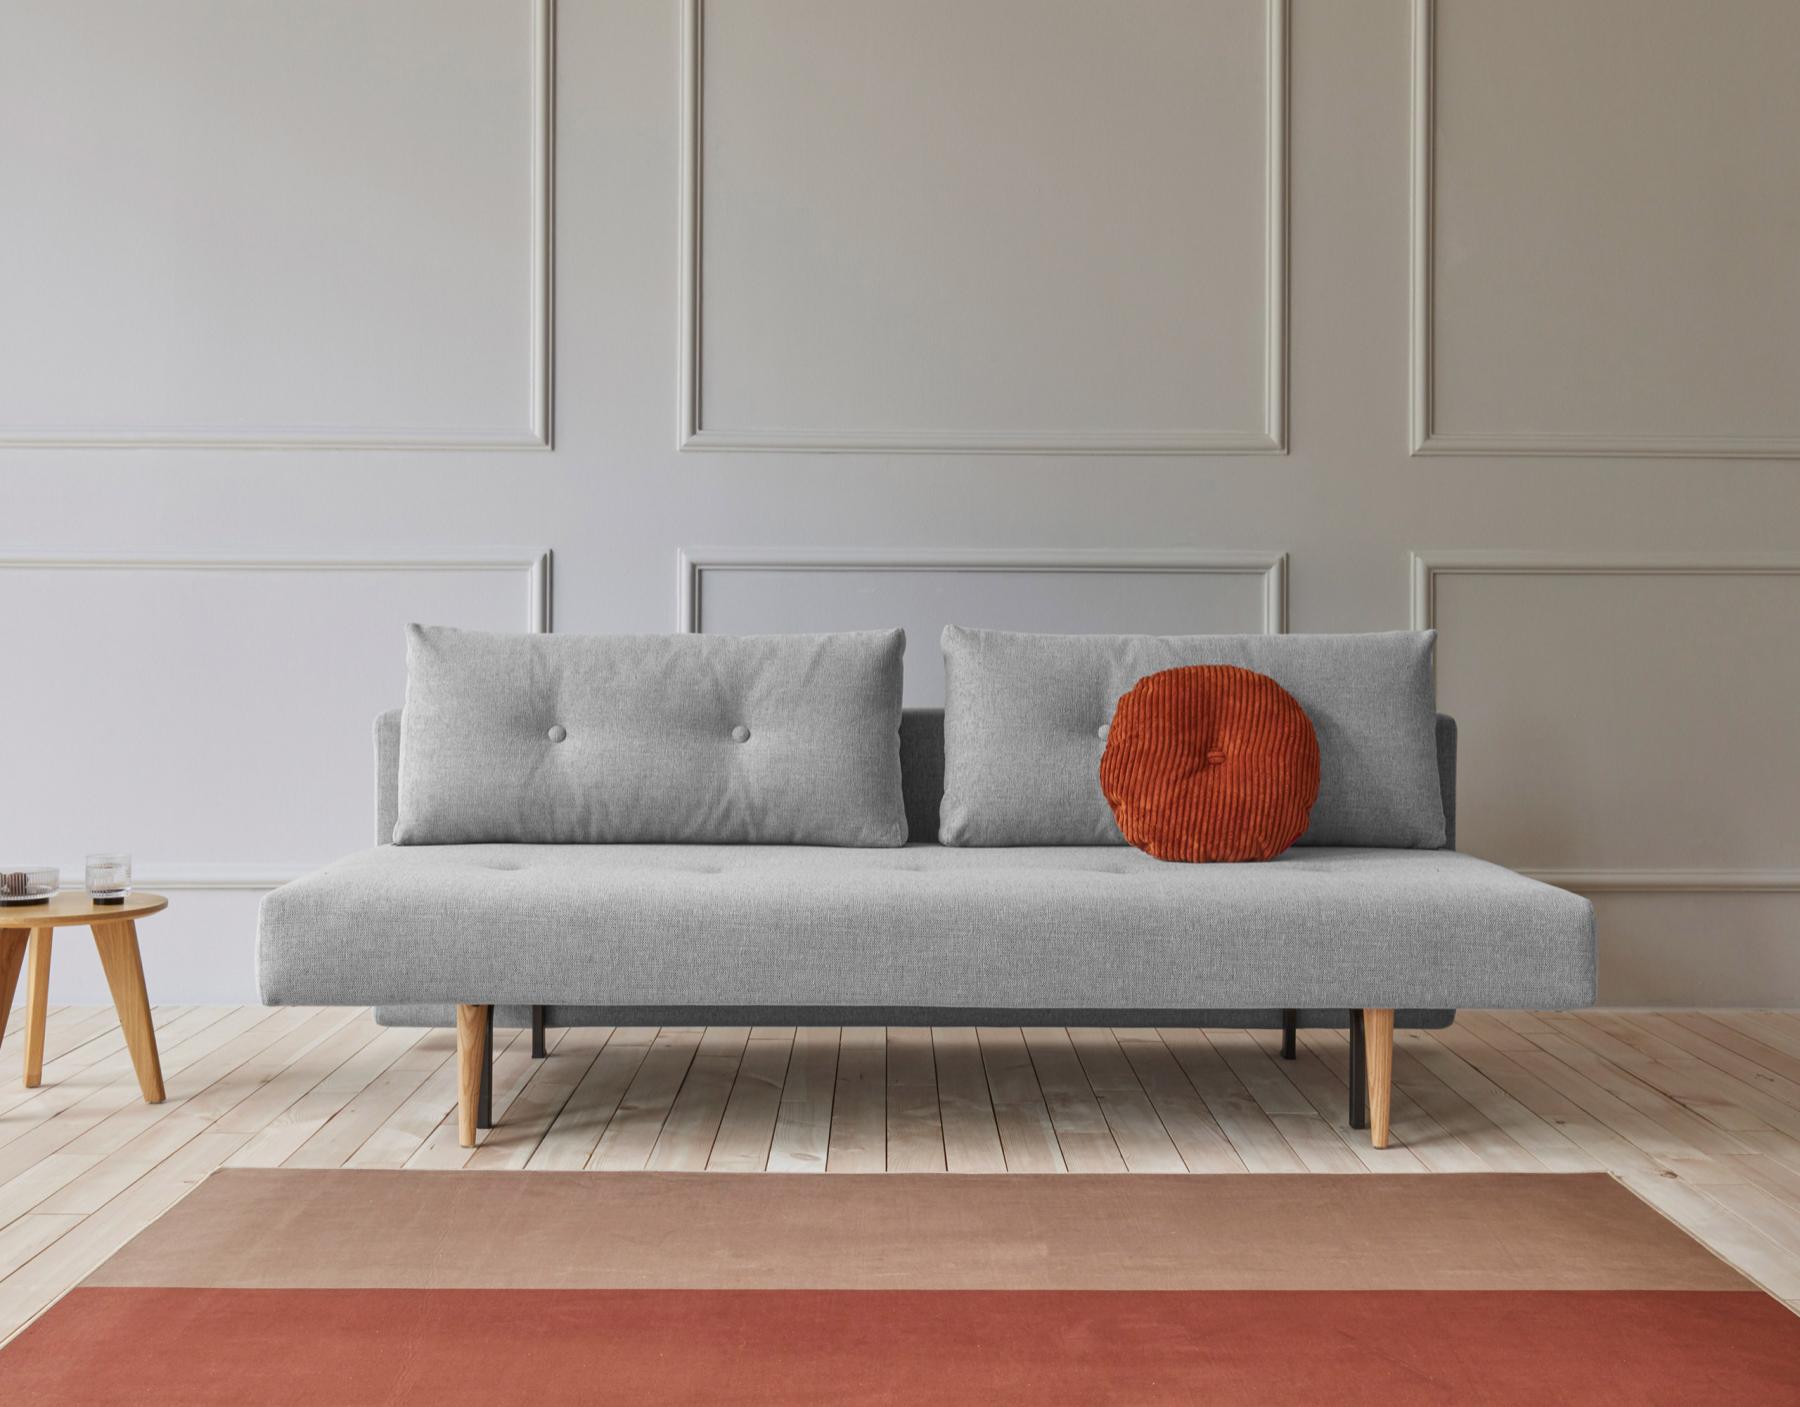 sav banner bundt Recast Plus Sofa featuring simple design and adaptional comfort.